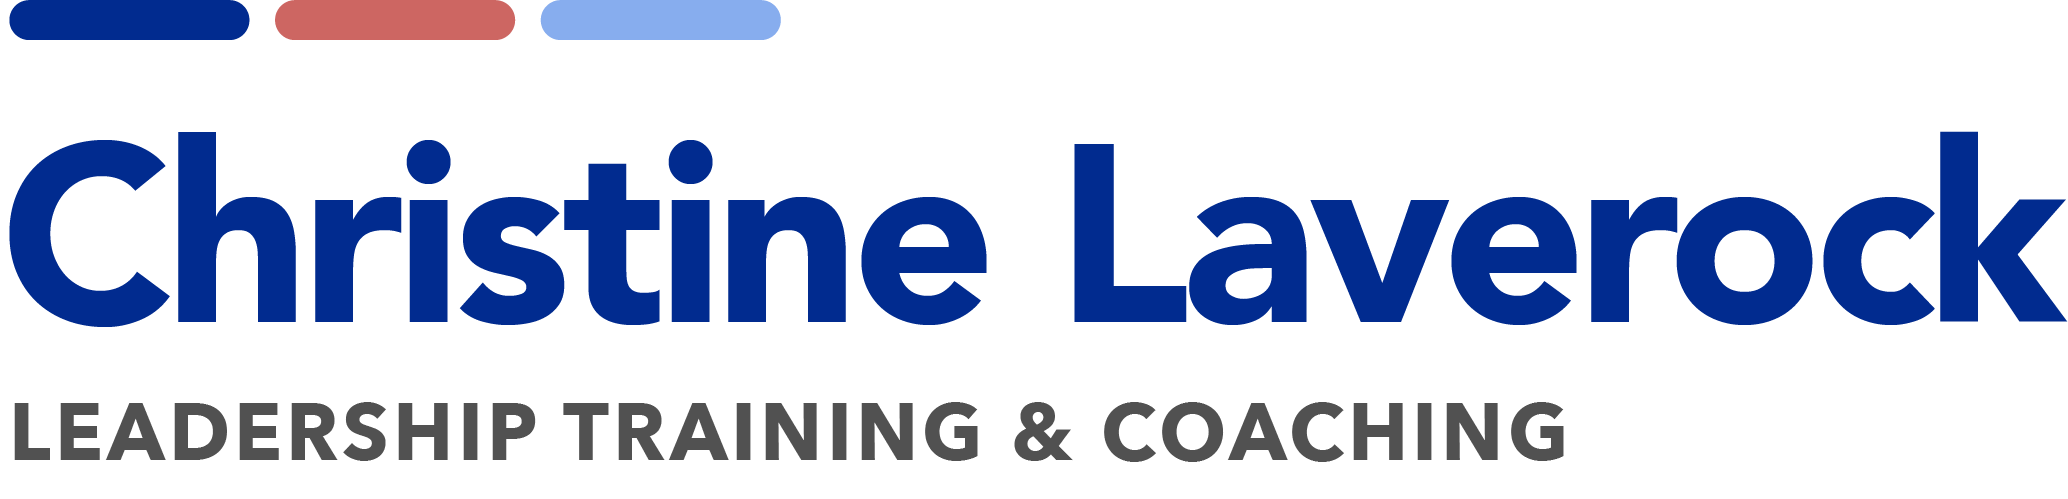 Christine Laverock: Leadership training & coaching